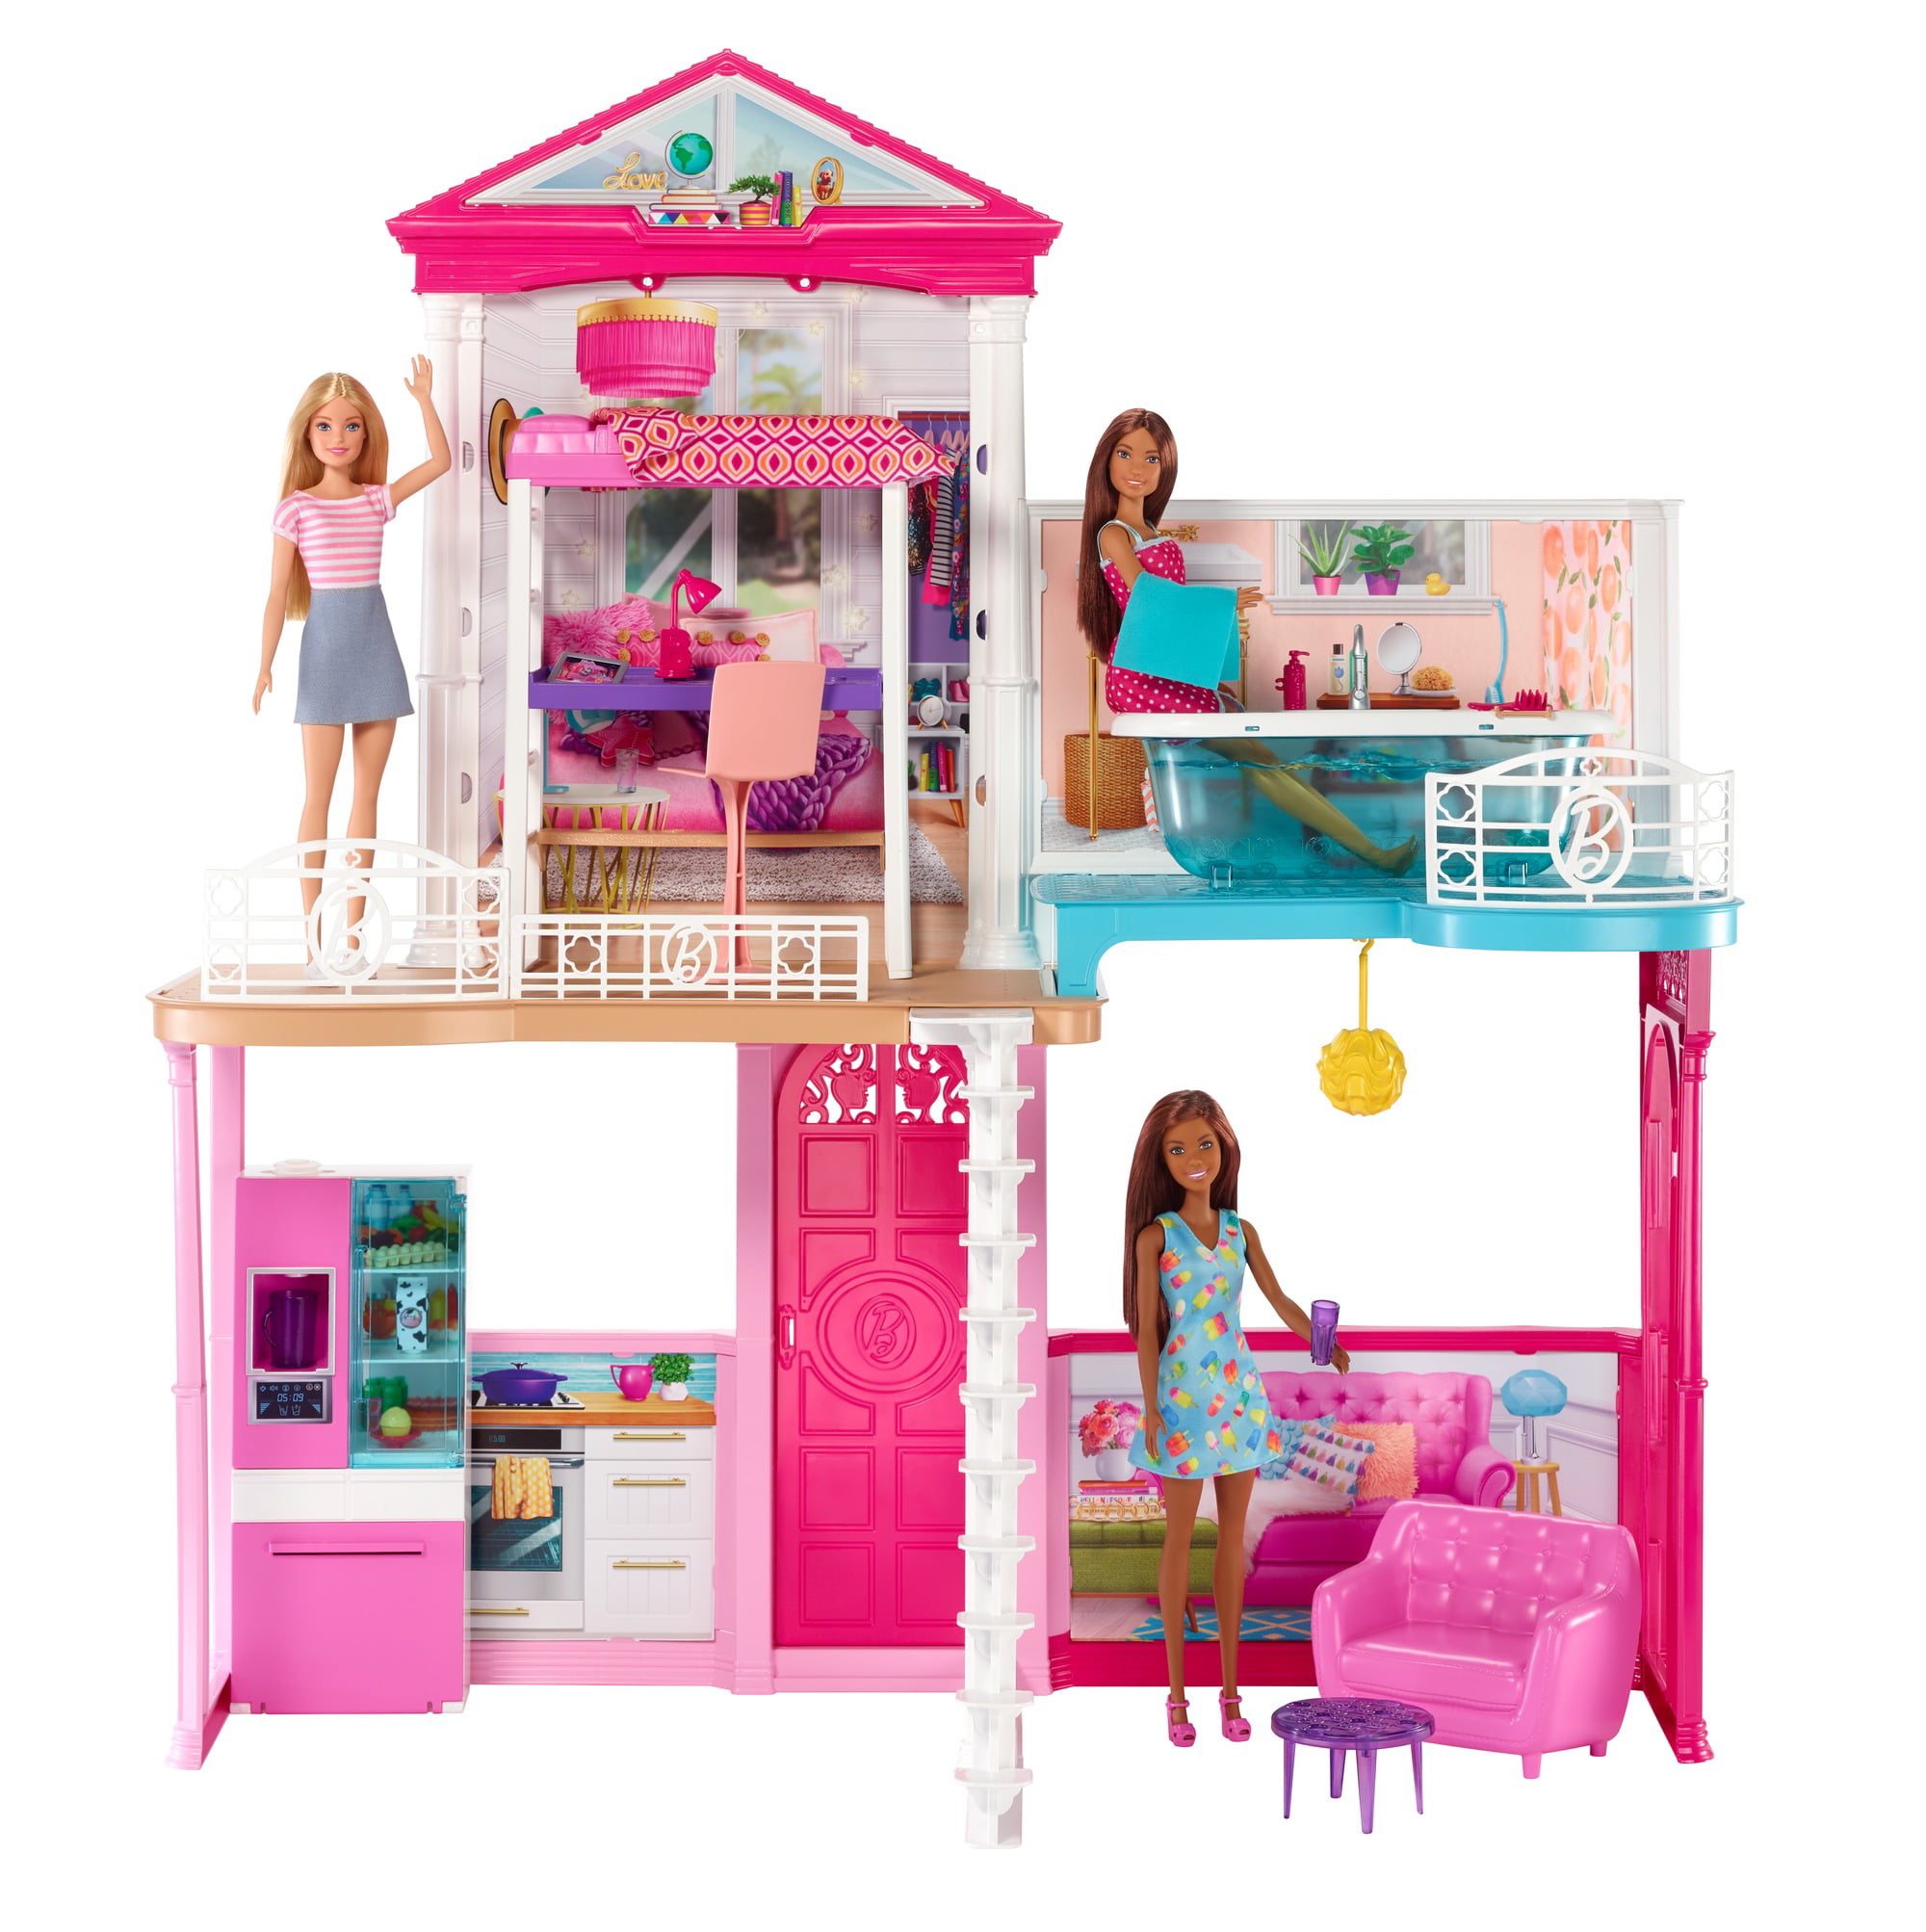 Food Play Set Mini Barbie Doll Dream House Kitchen Refrigerator Accessories 